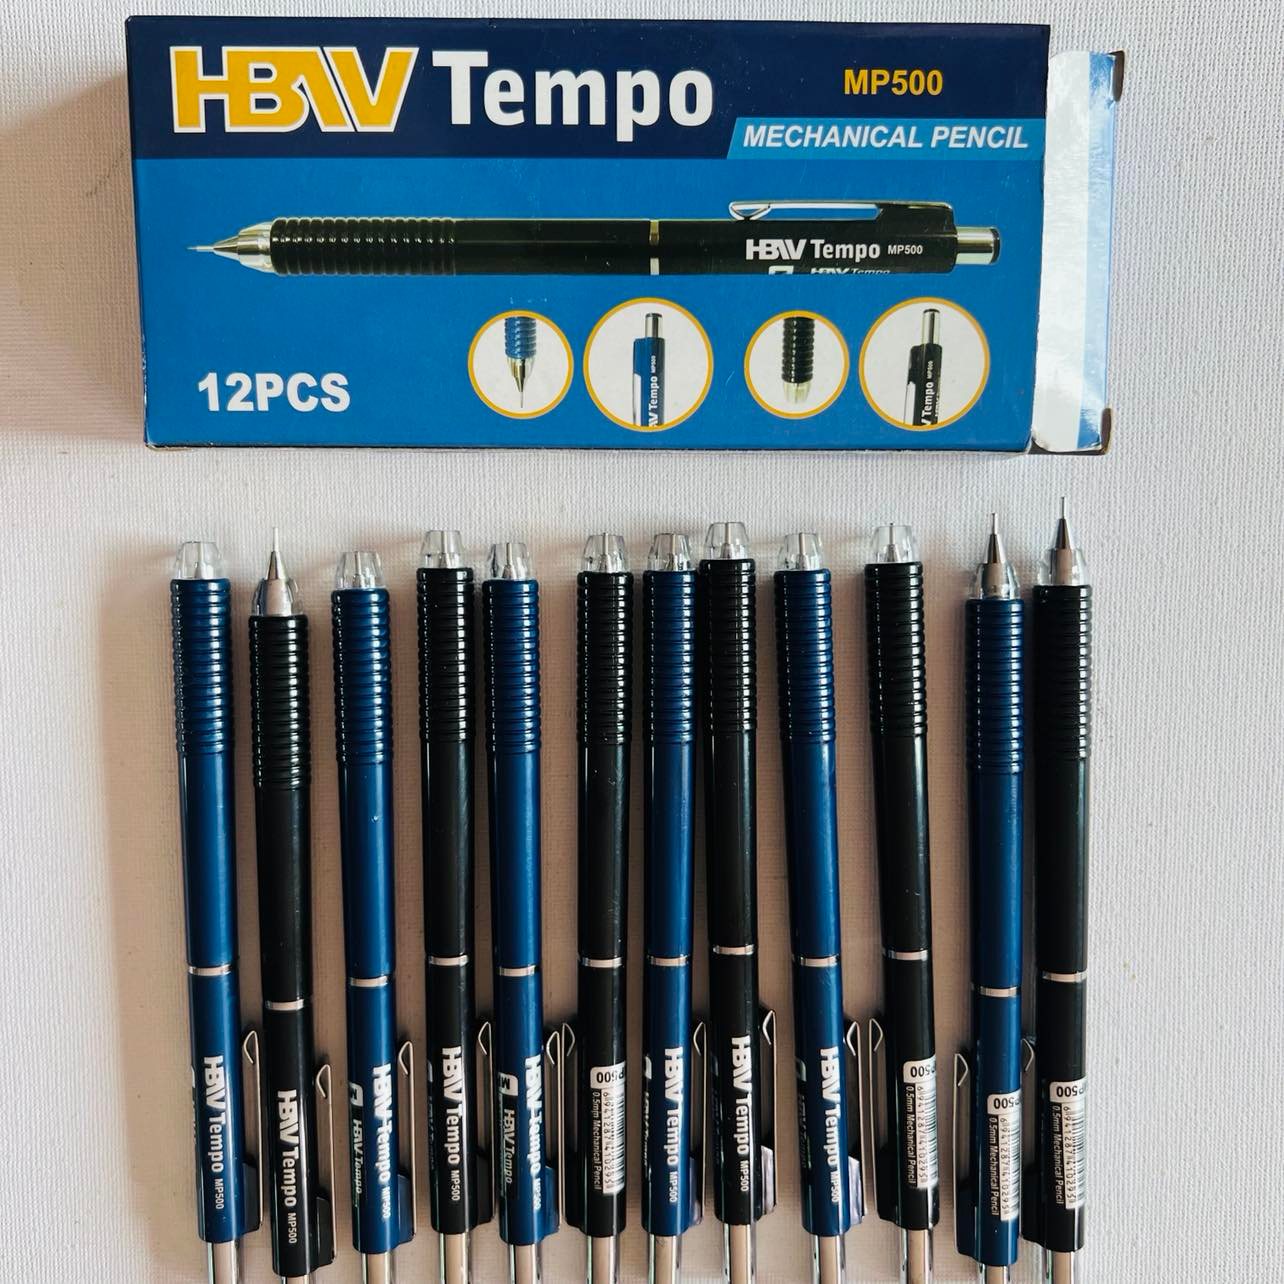 HBW Mechanical Pencil MP-205 - HBW